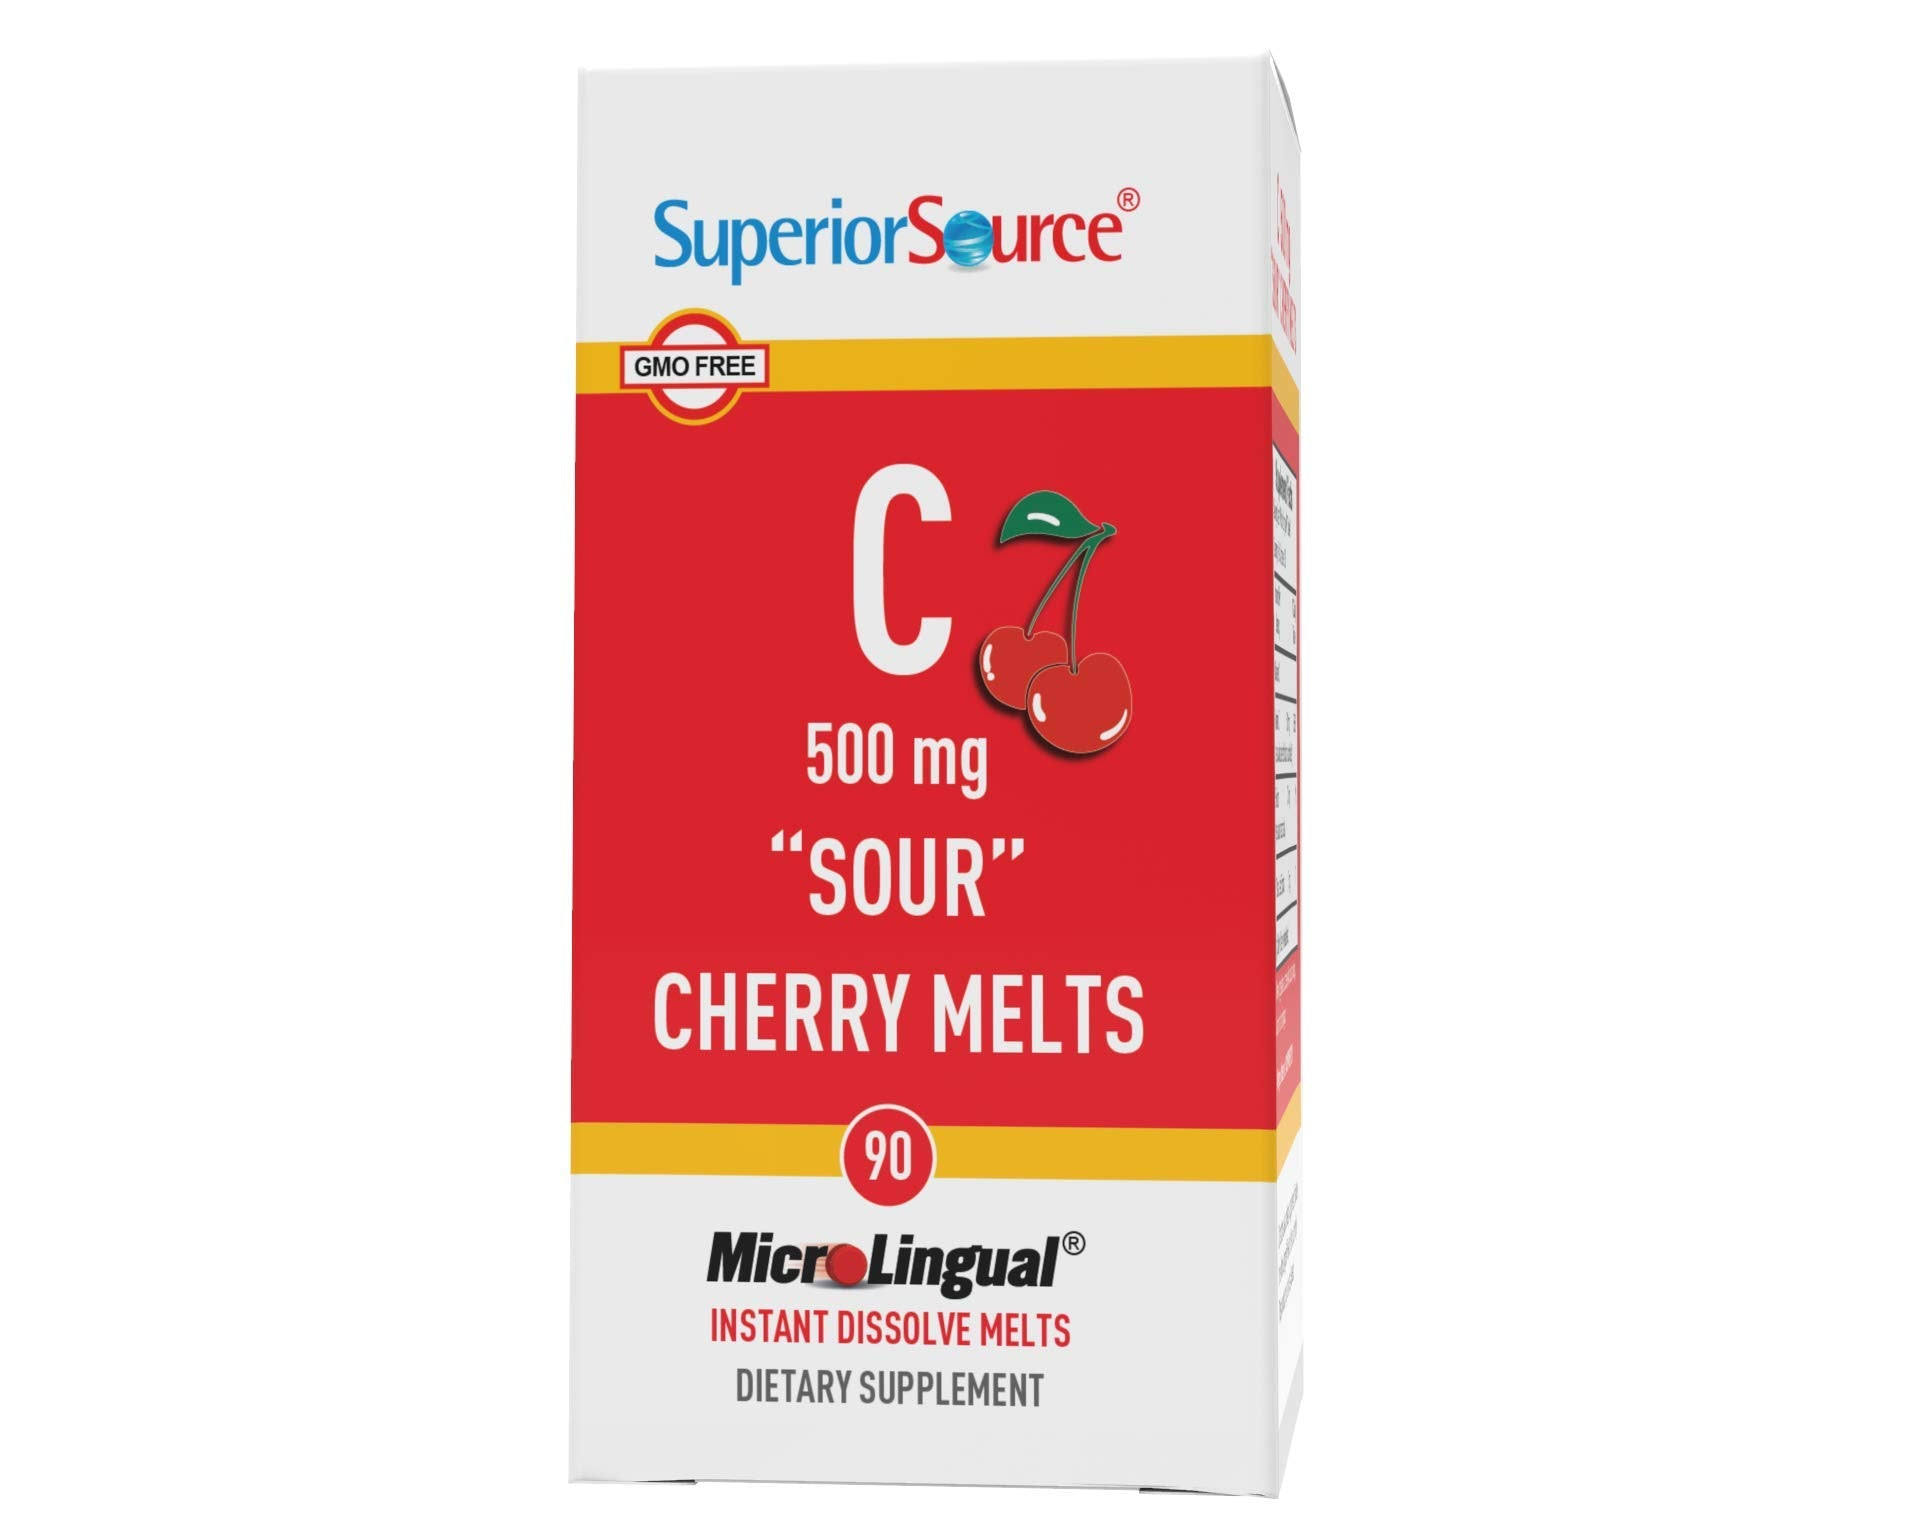 Superior Source Vitamin C Sour Melts - Cherry, 500mg, 90 Instant Dissolve Melts